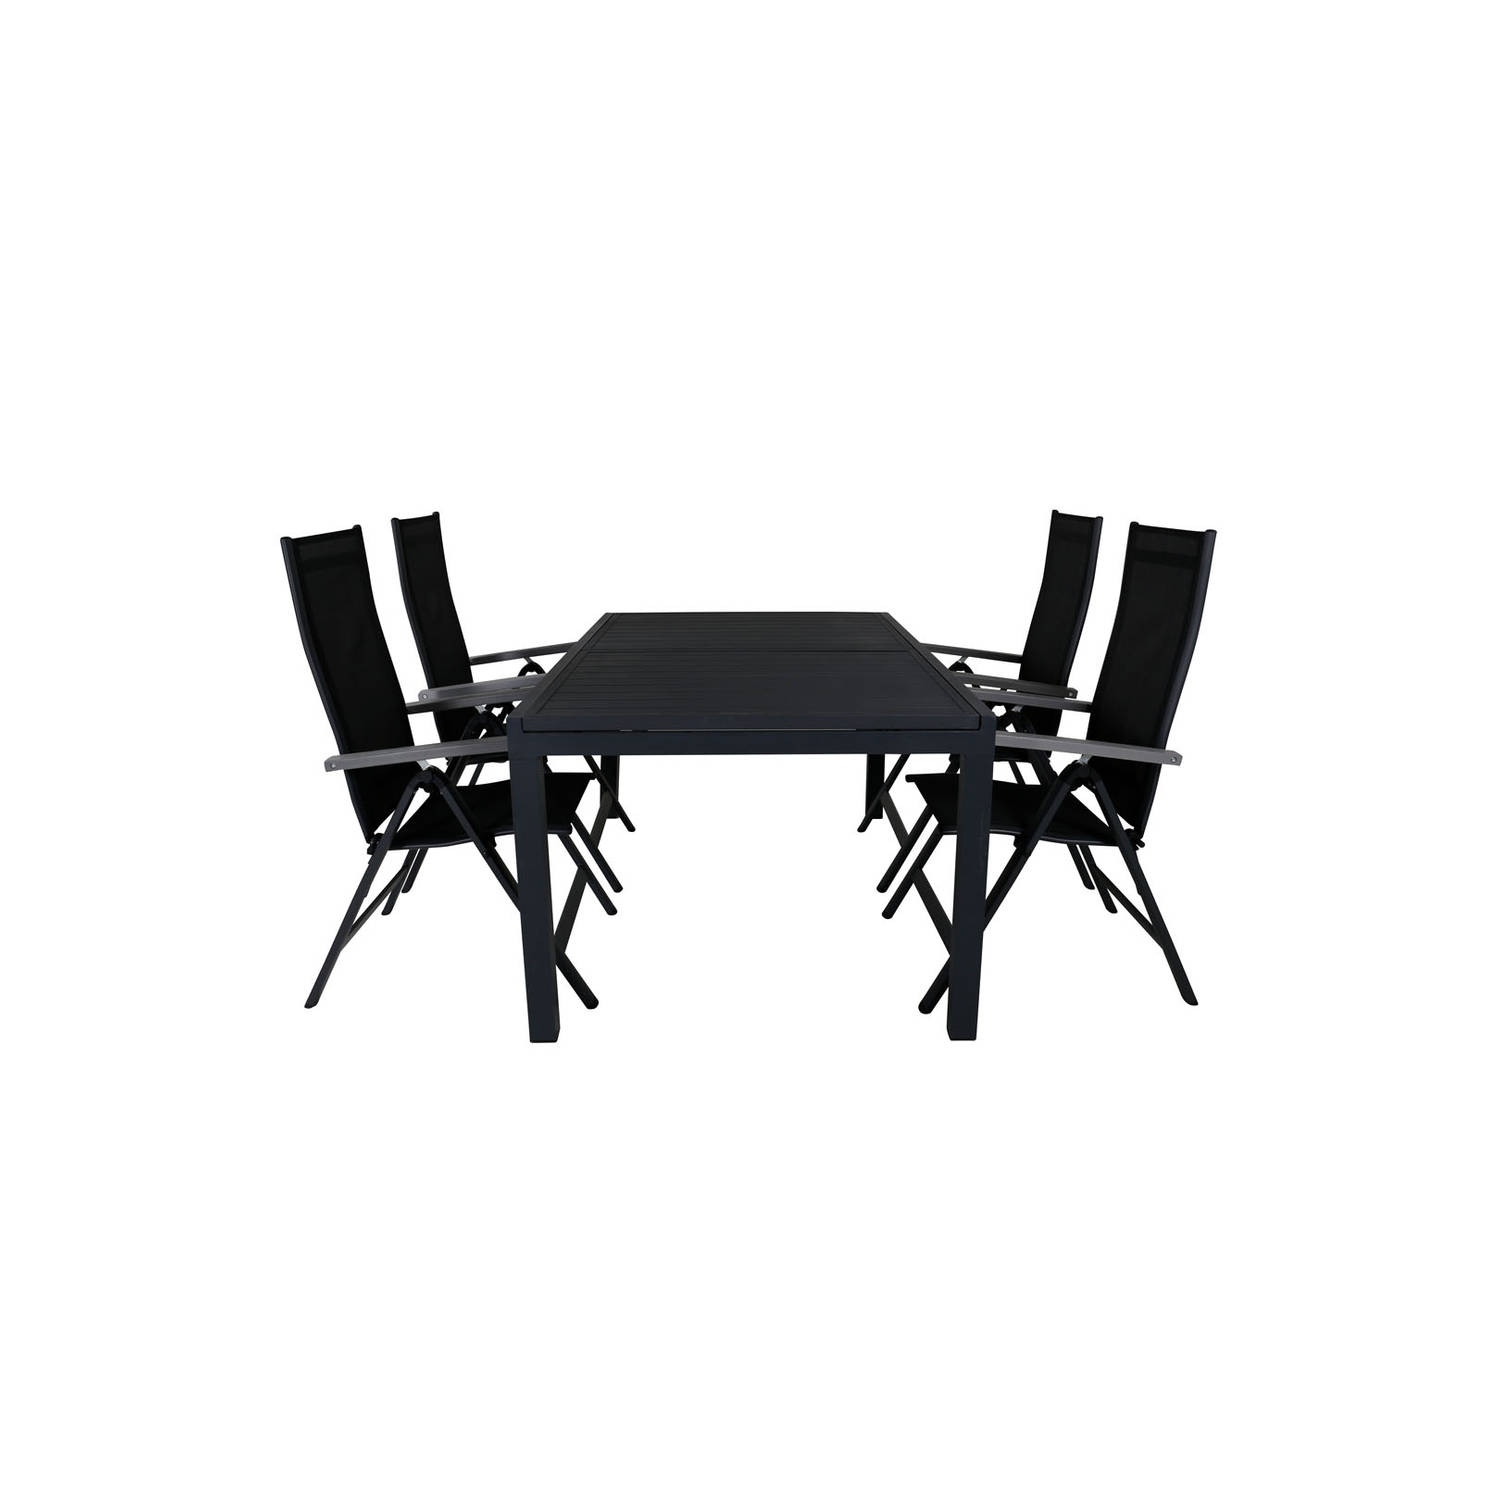 Marbella tuinmeubelset tafel 100x160/240cm en 4 stoel Albany zwart.